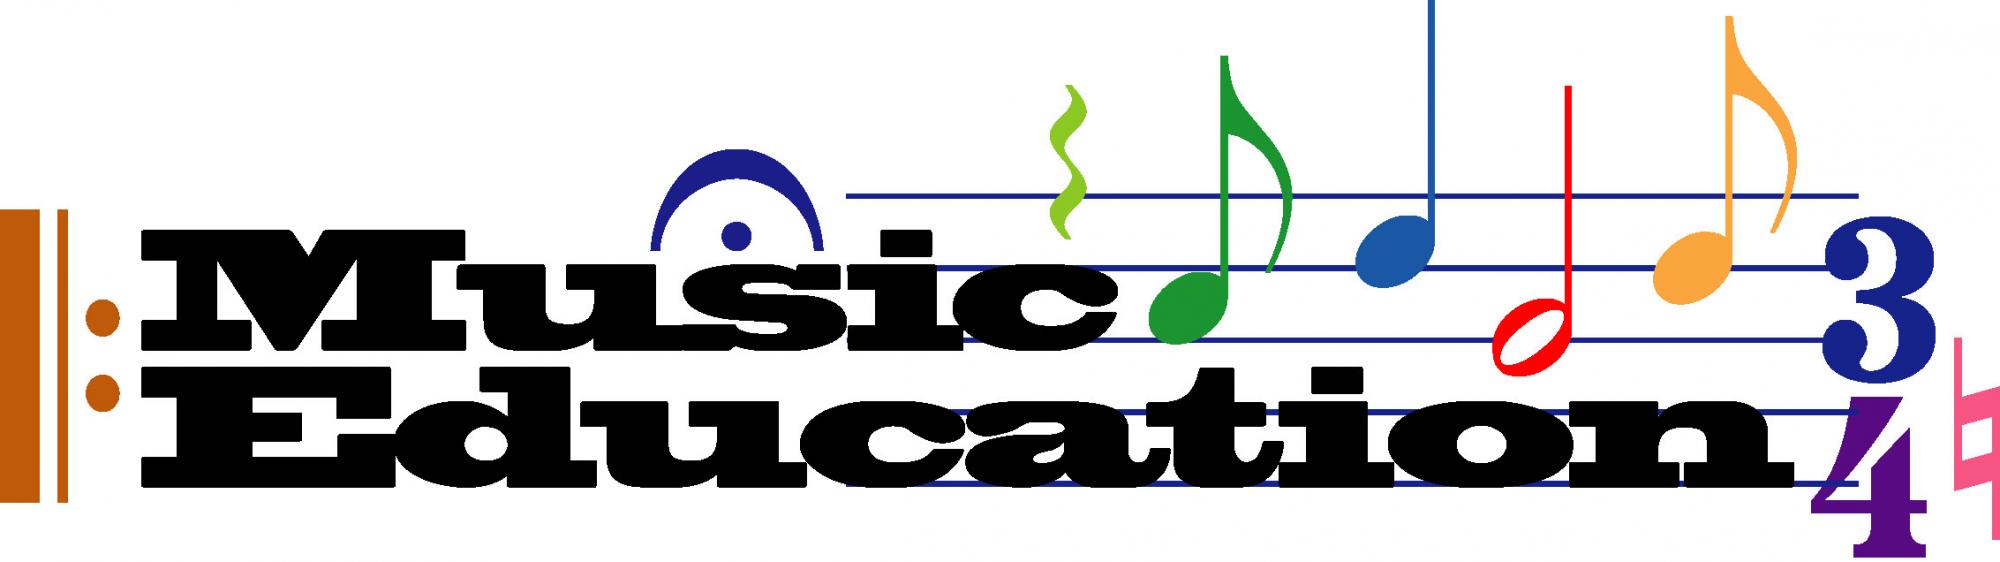 Music Education Banner